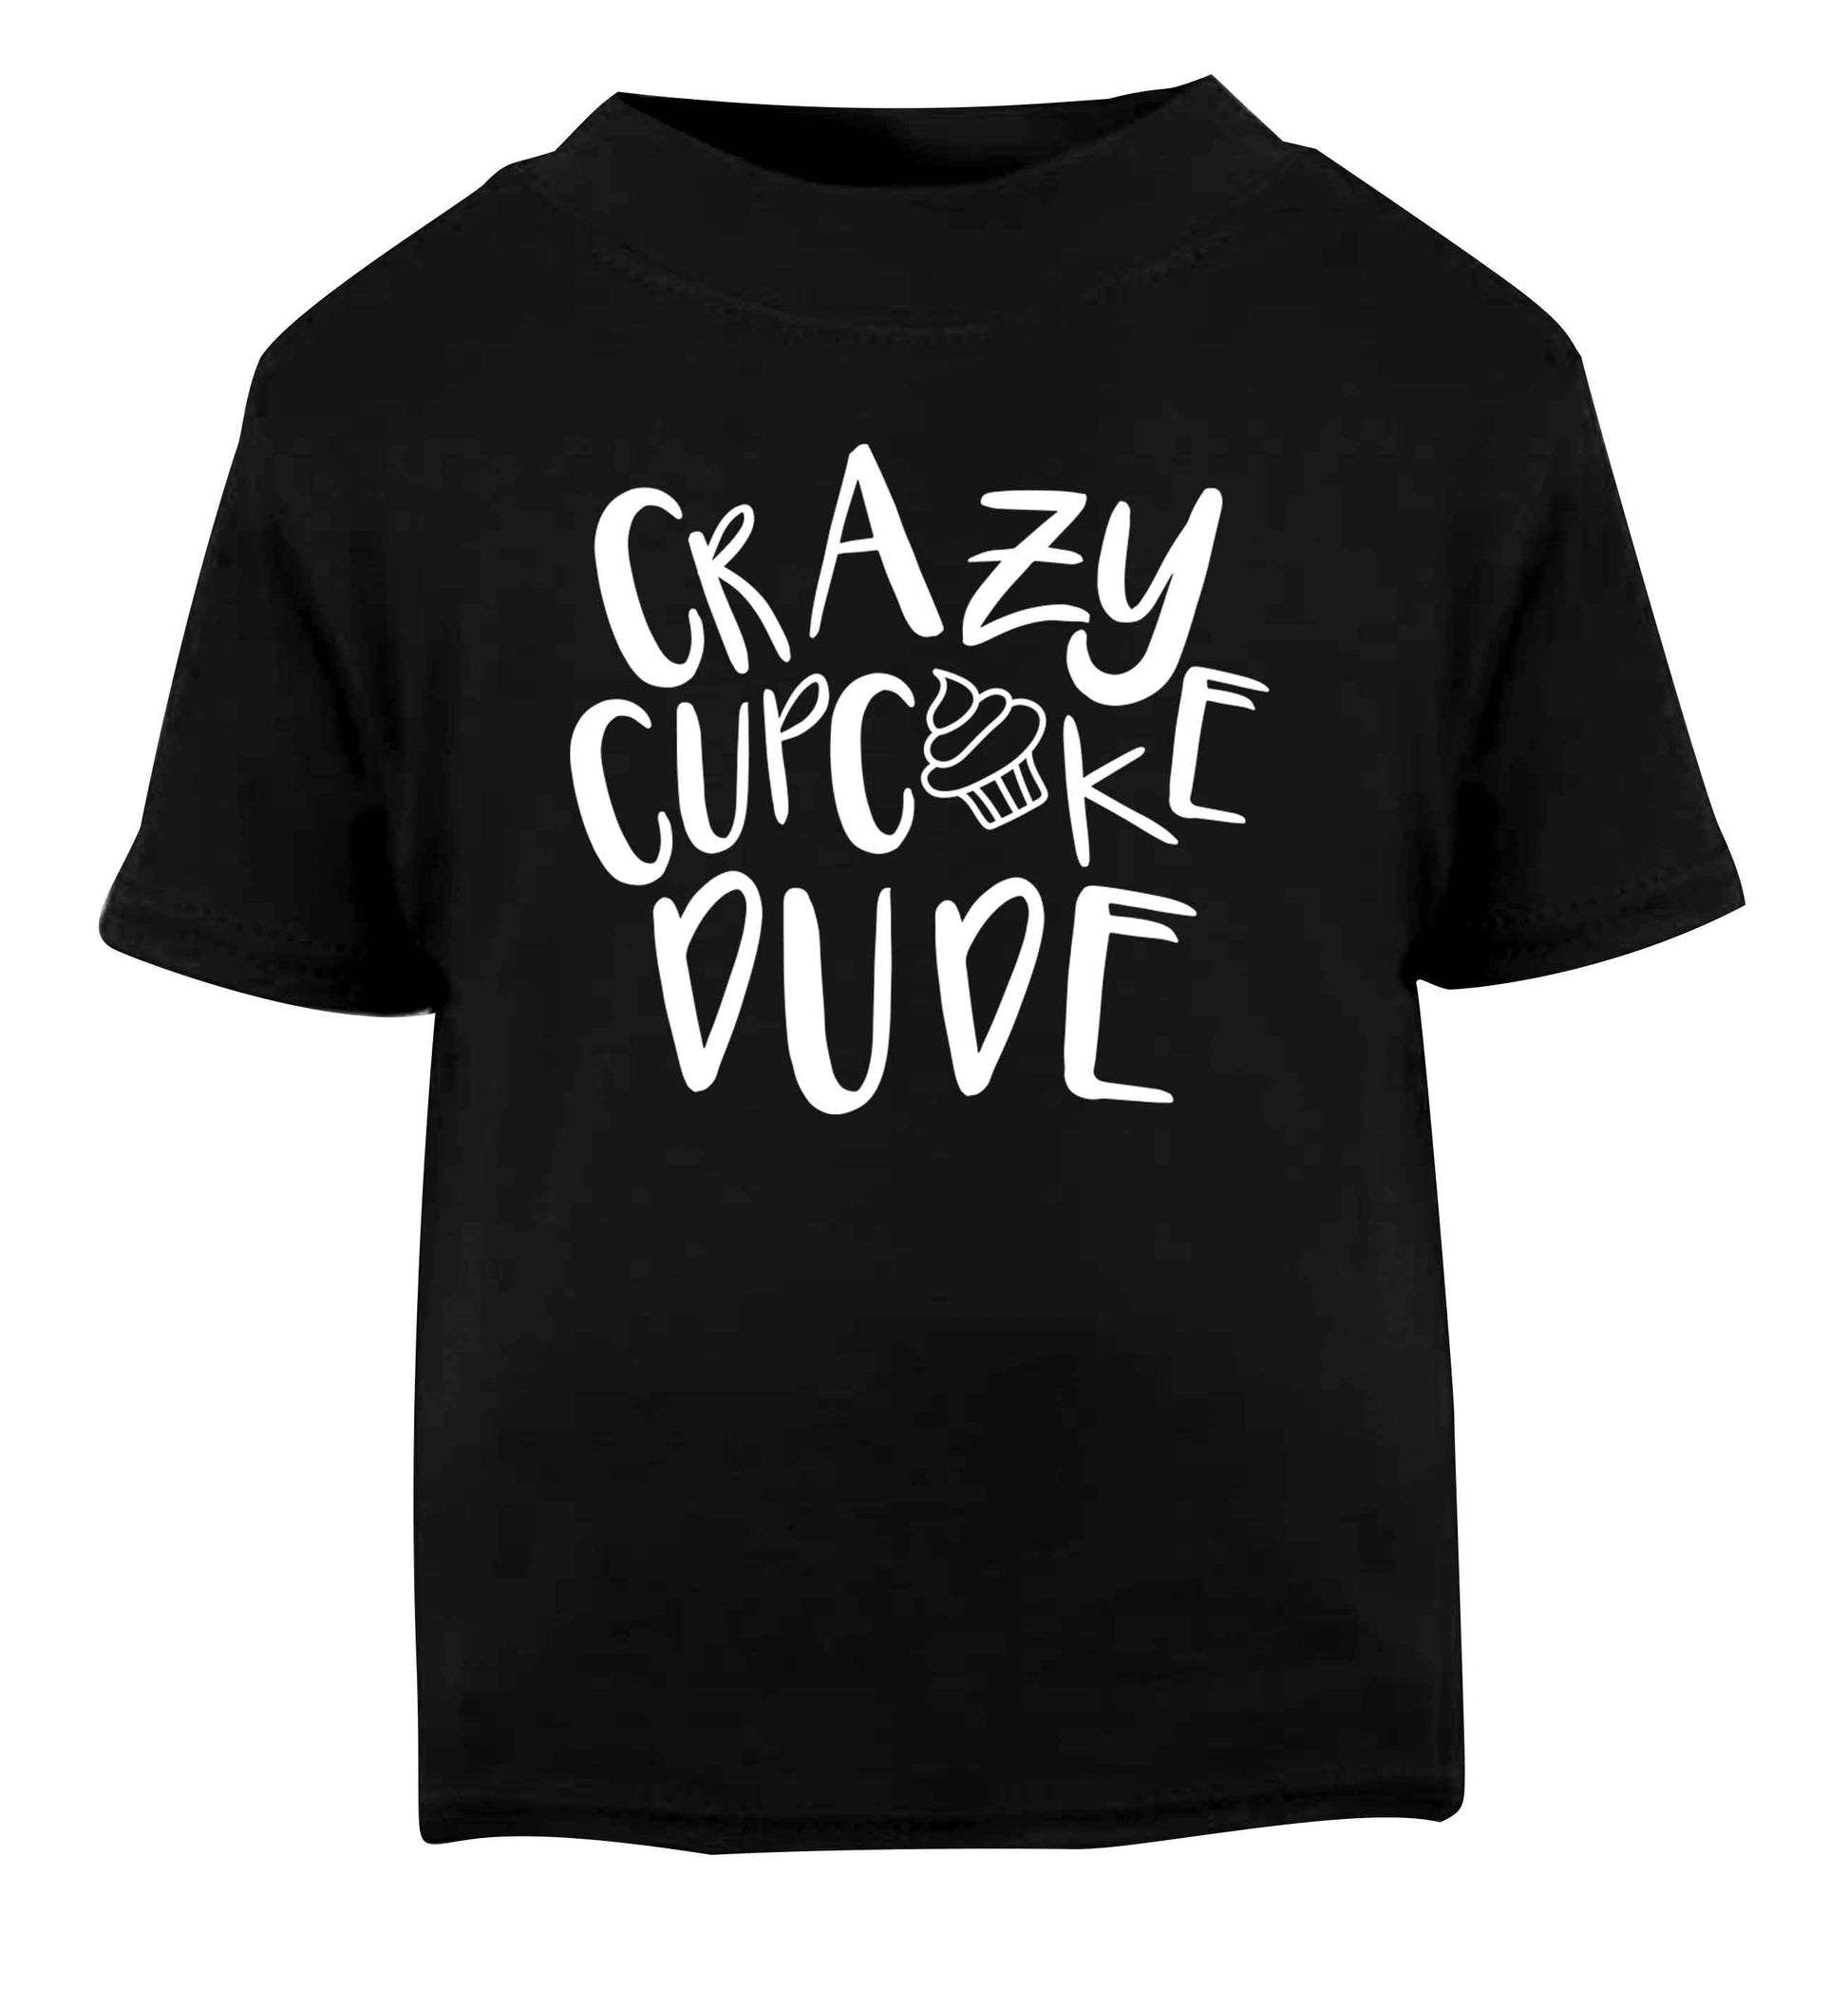 Crazy cupcake dude Black Baby Toddler Tshirt 2 years